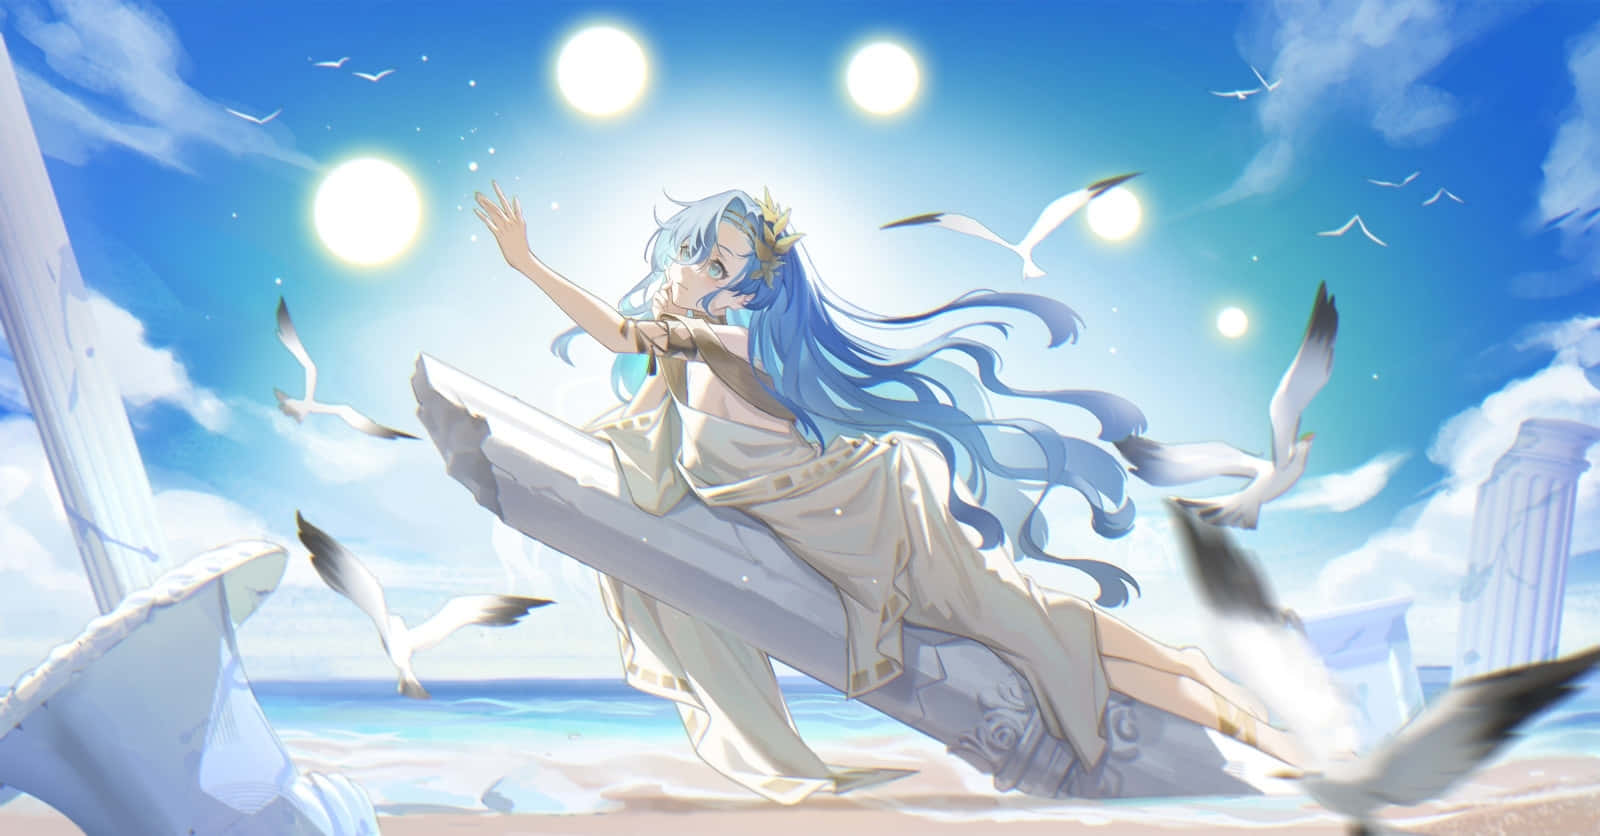 Seaside_ Anime_ Girl_with_ Seagulls Wallpaper